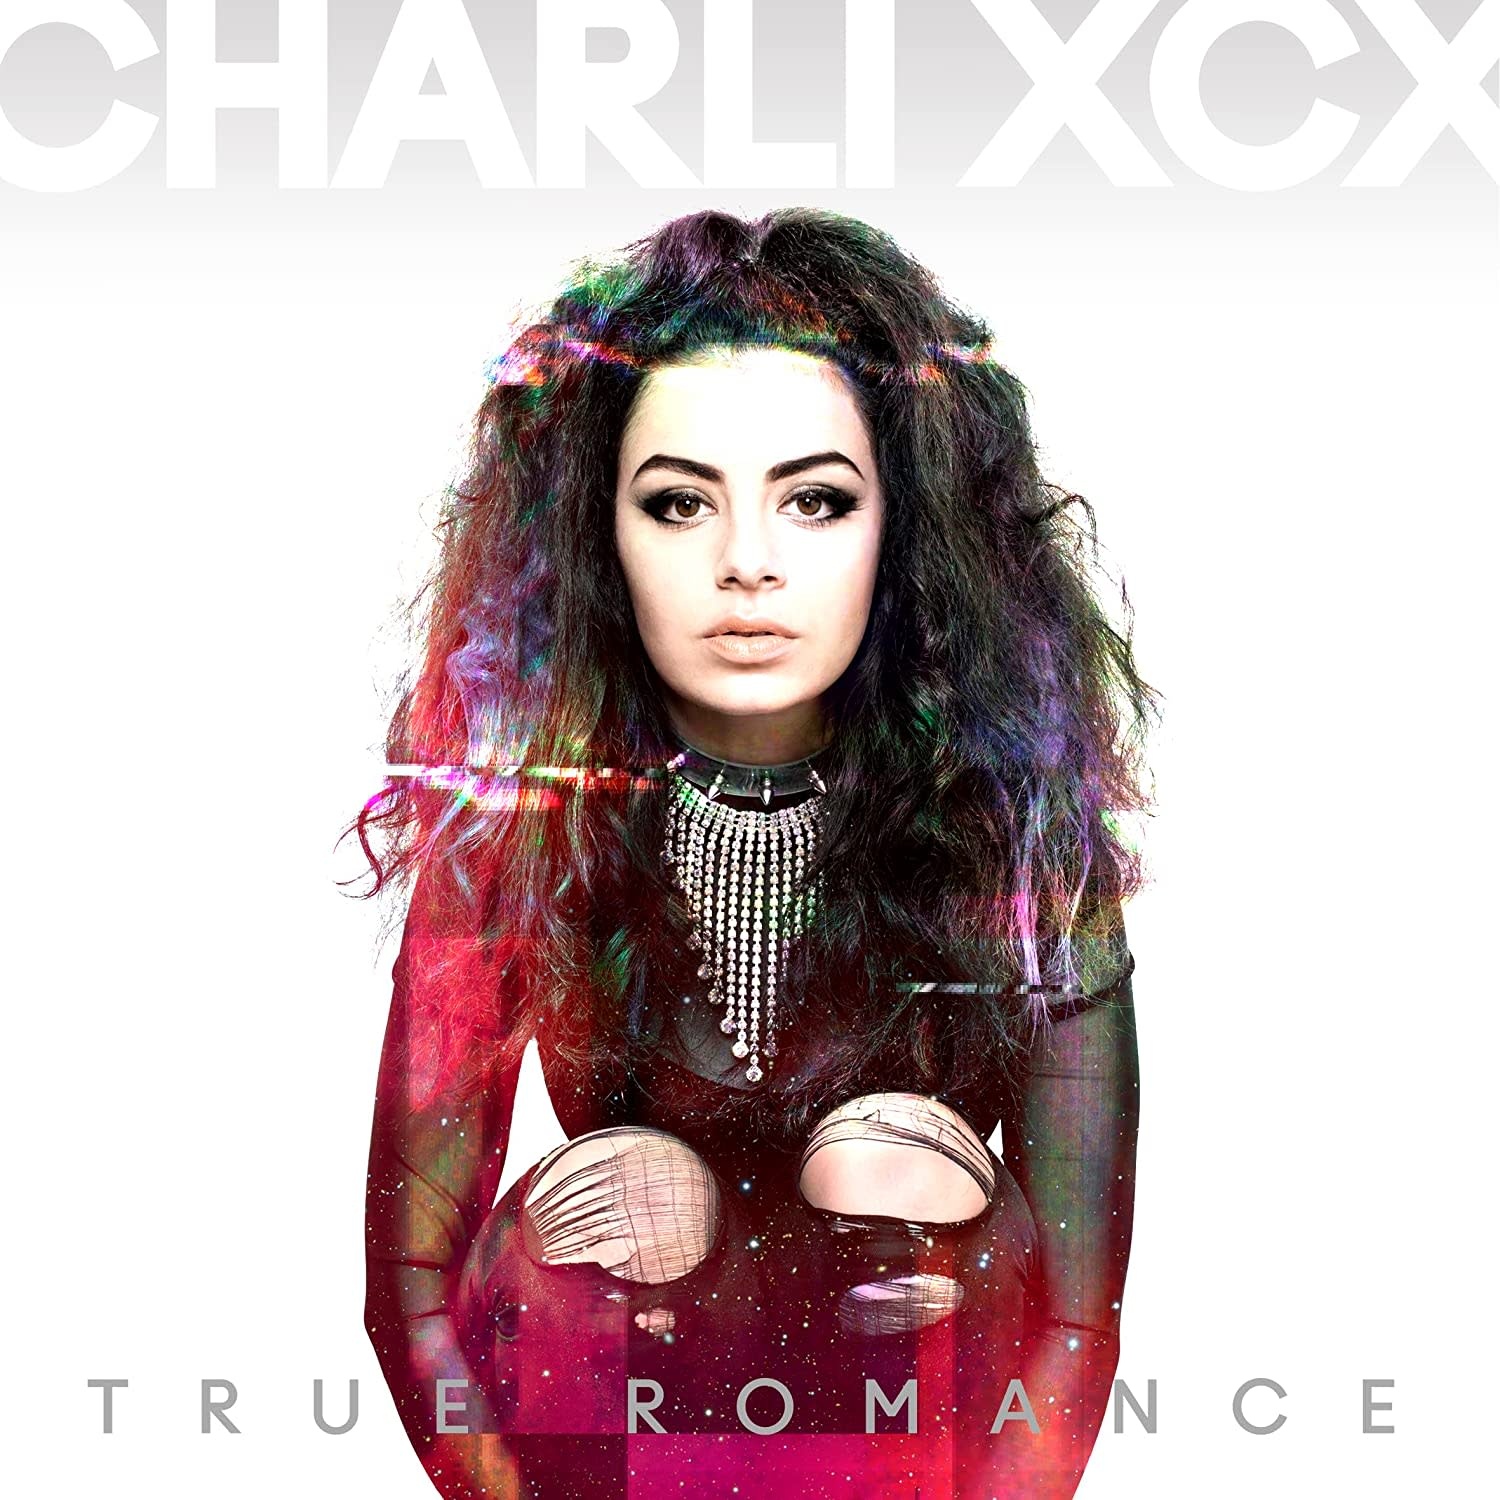 Electronic Charli XCX - True Romance (Silver Vinyl)